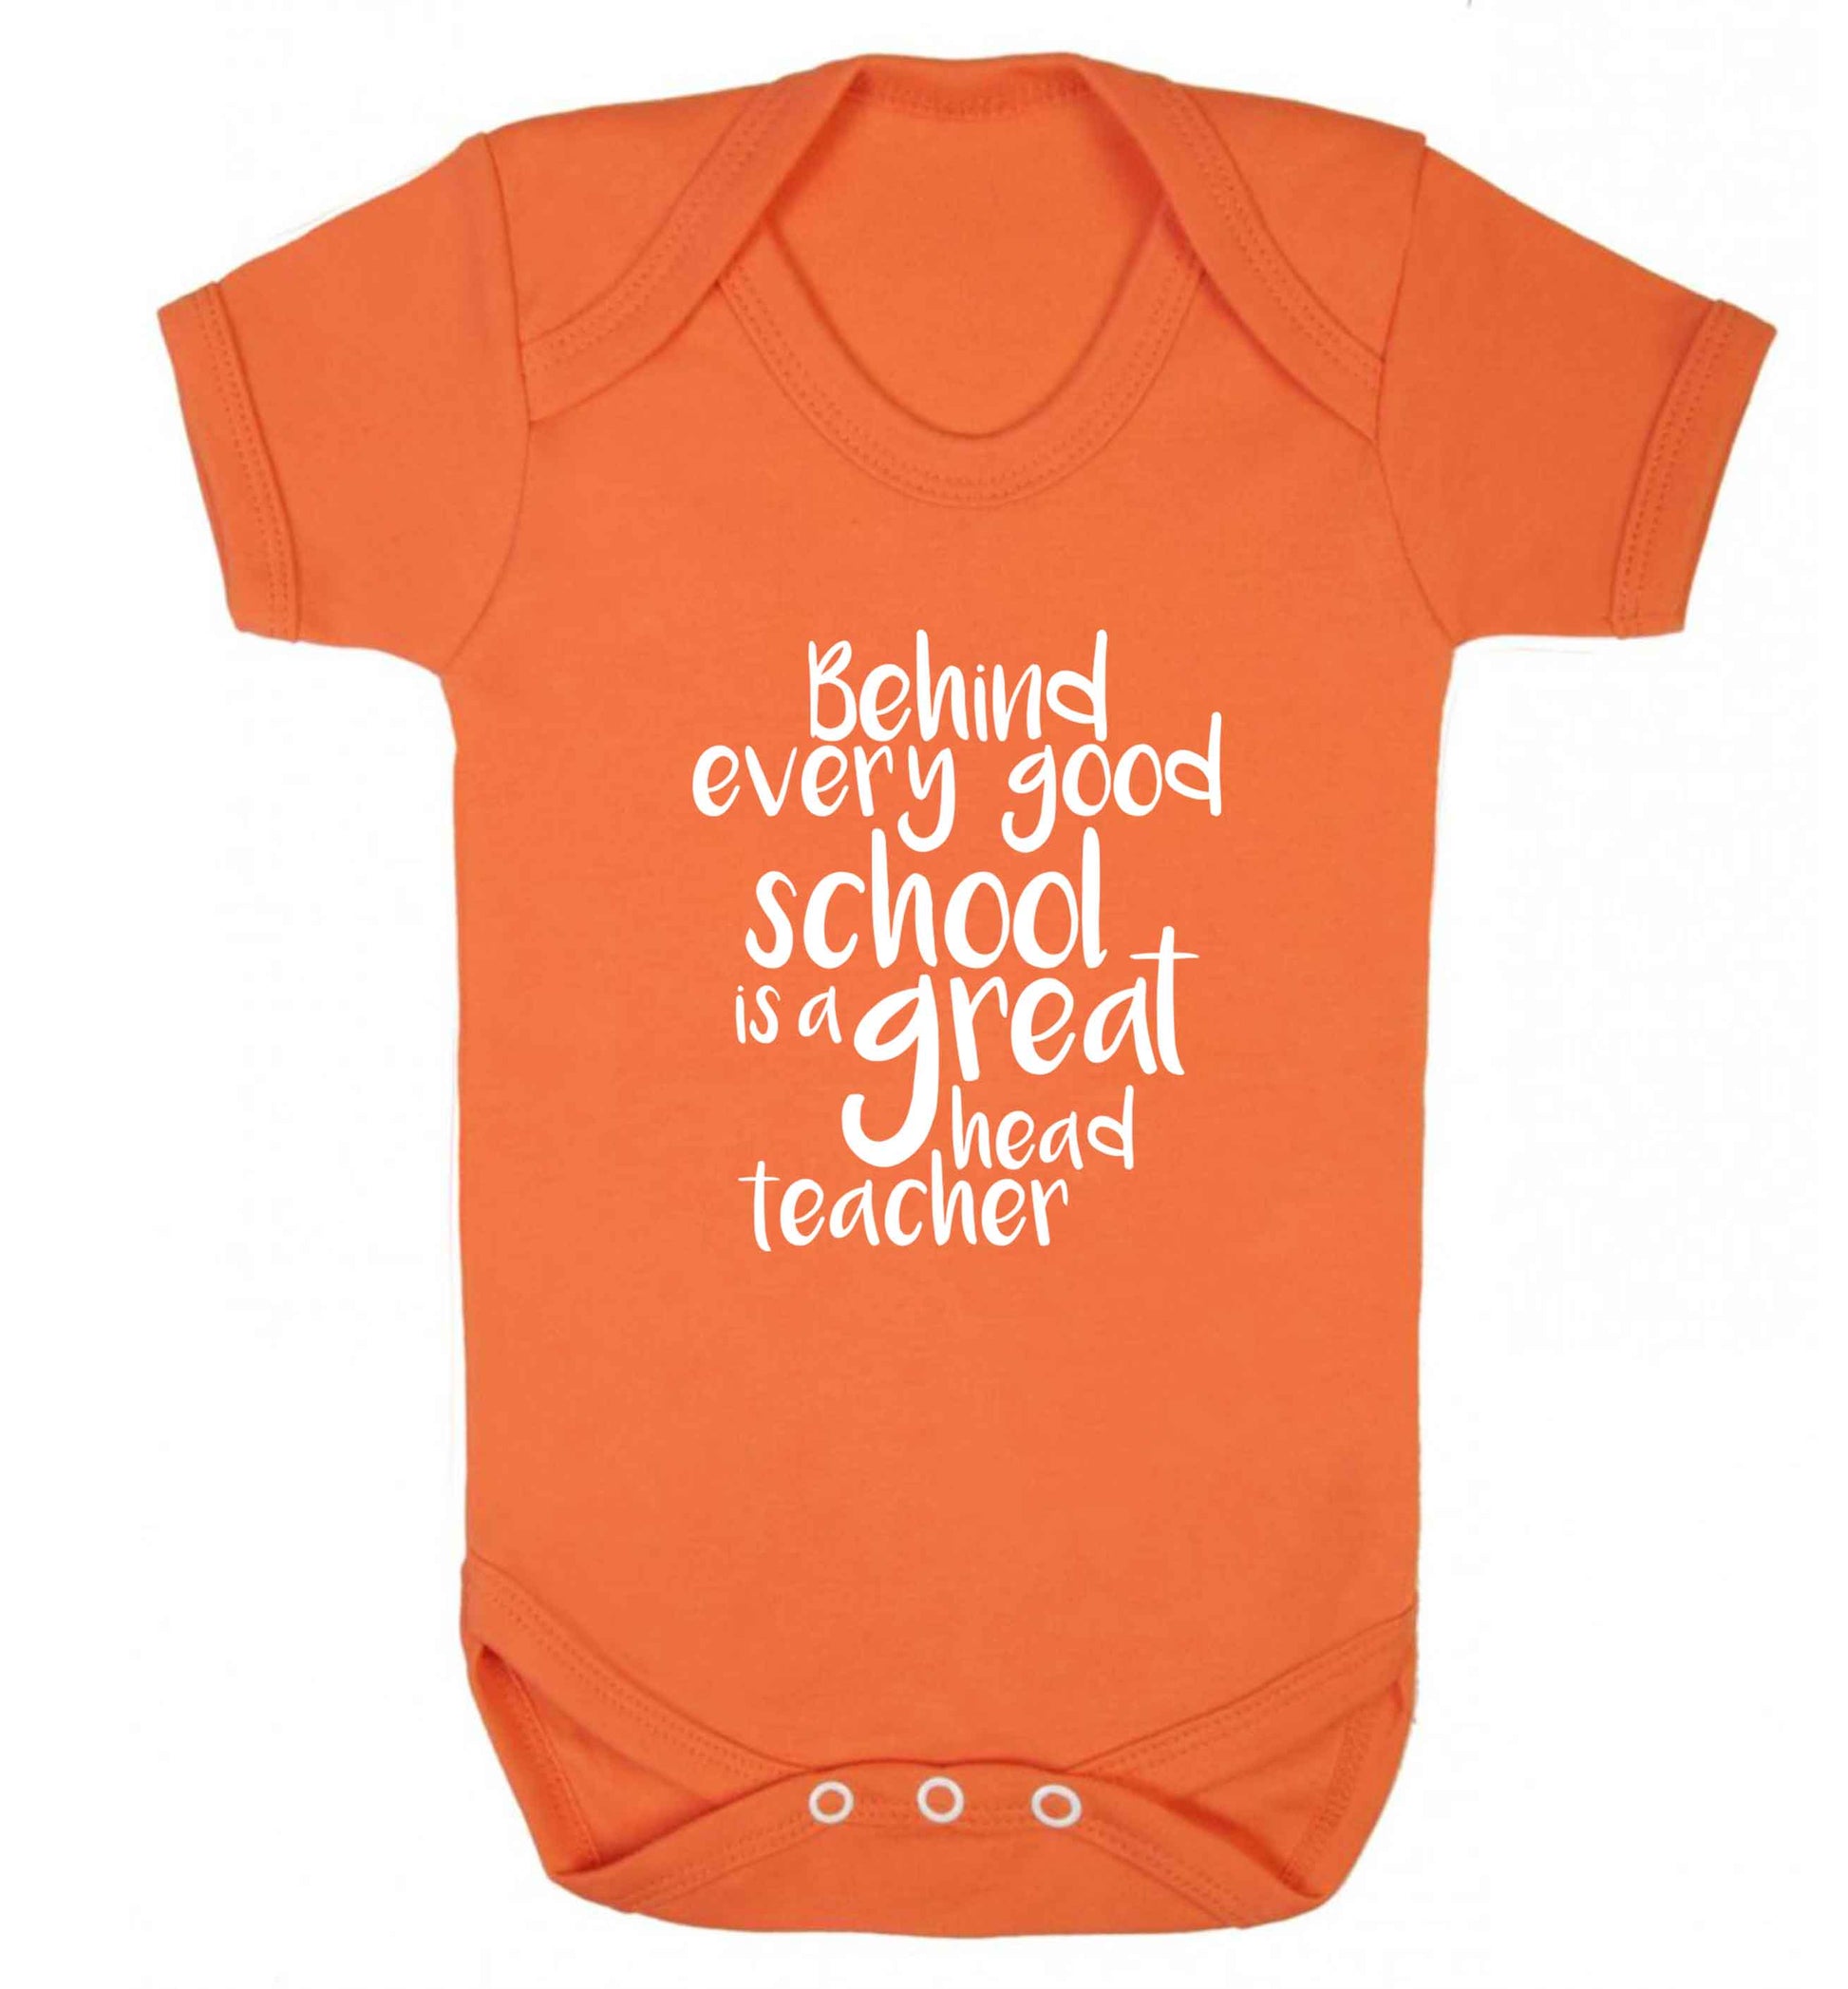 Behind every good school is a great head teacher baby vest orange 18-24 months